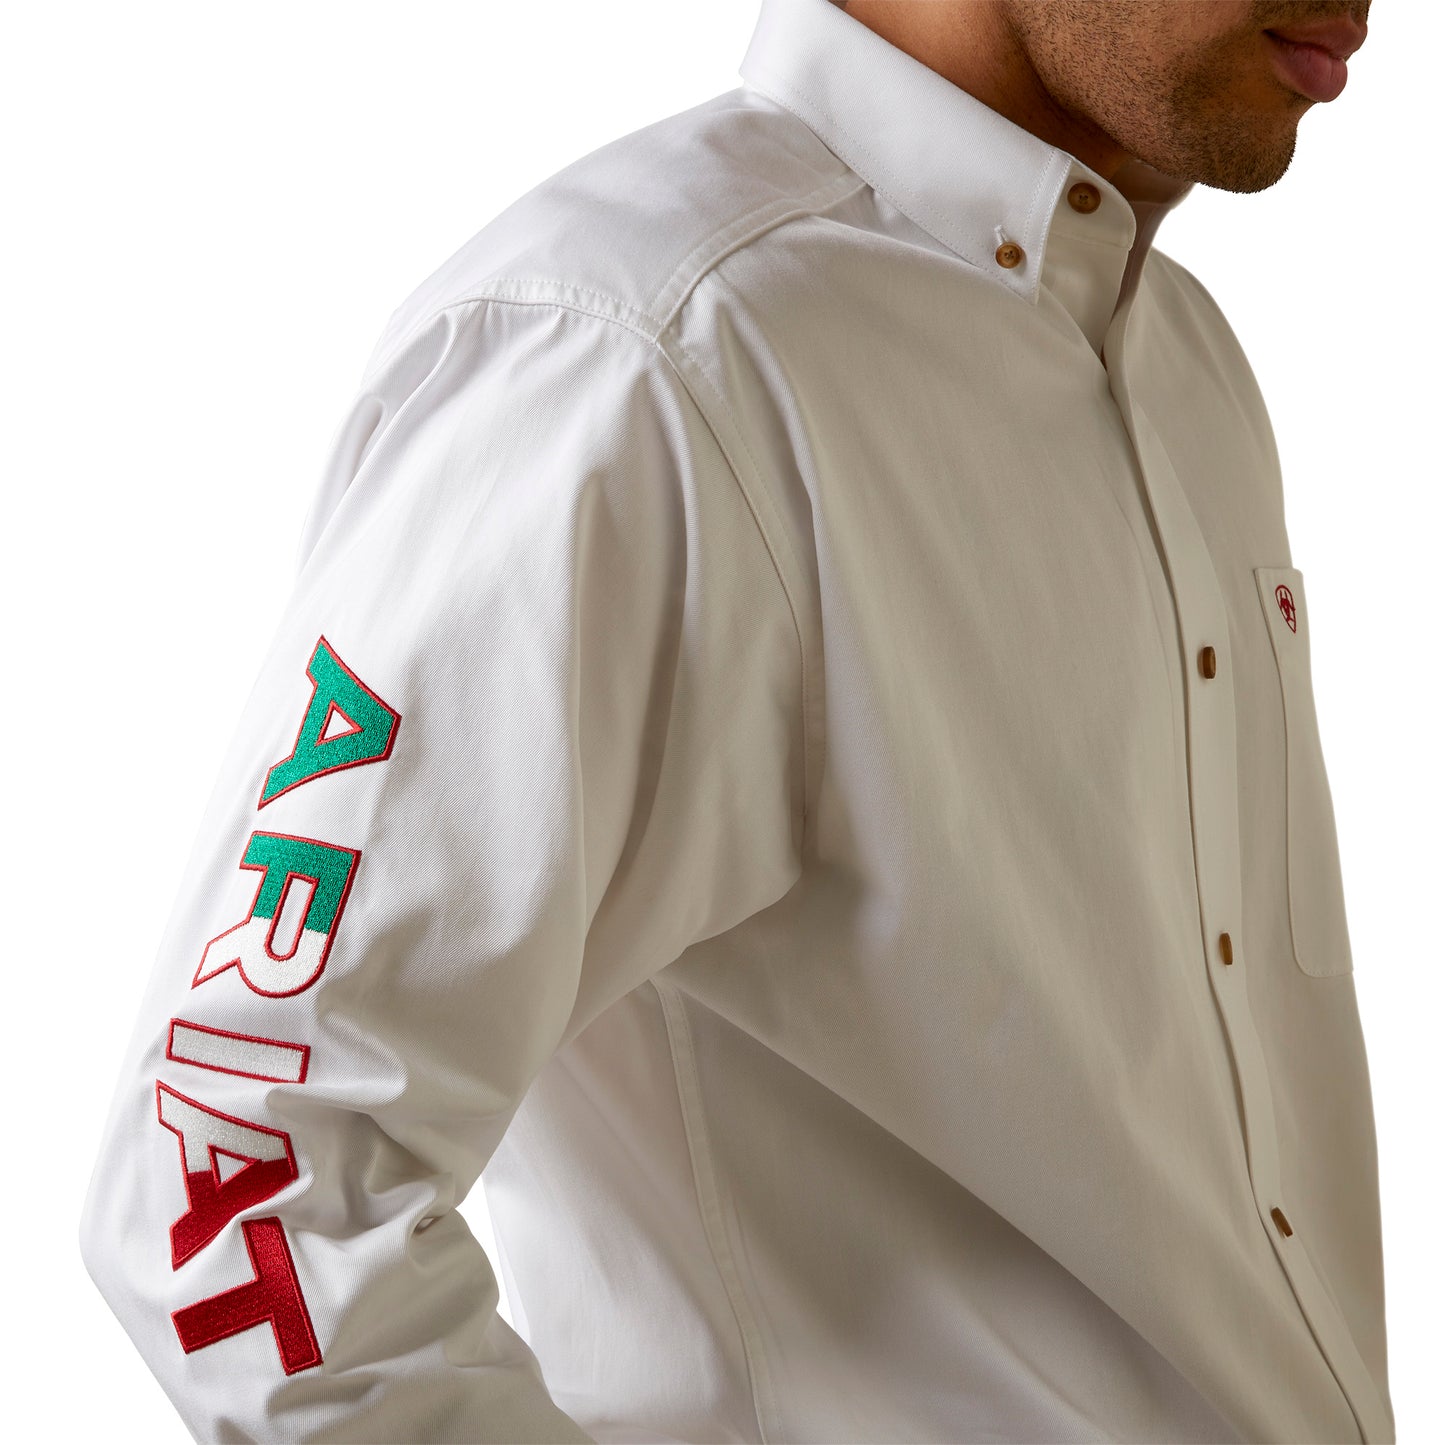 Ariat Mexico Team Logo Twill Classic Fit Shirt - White